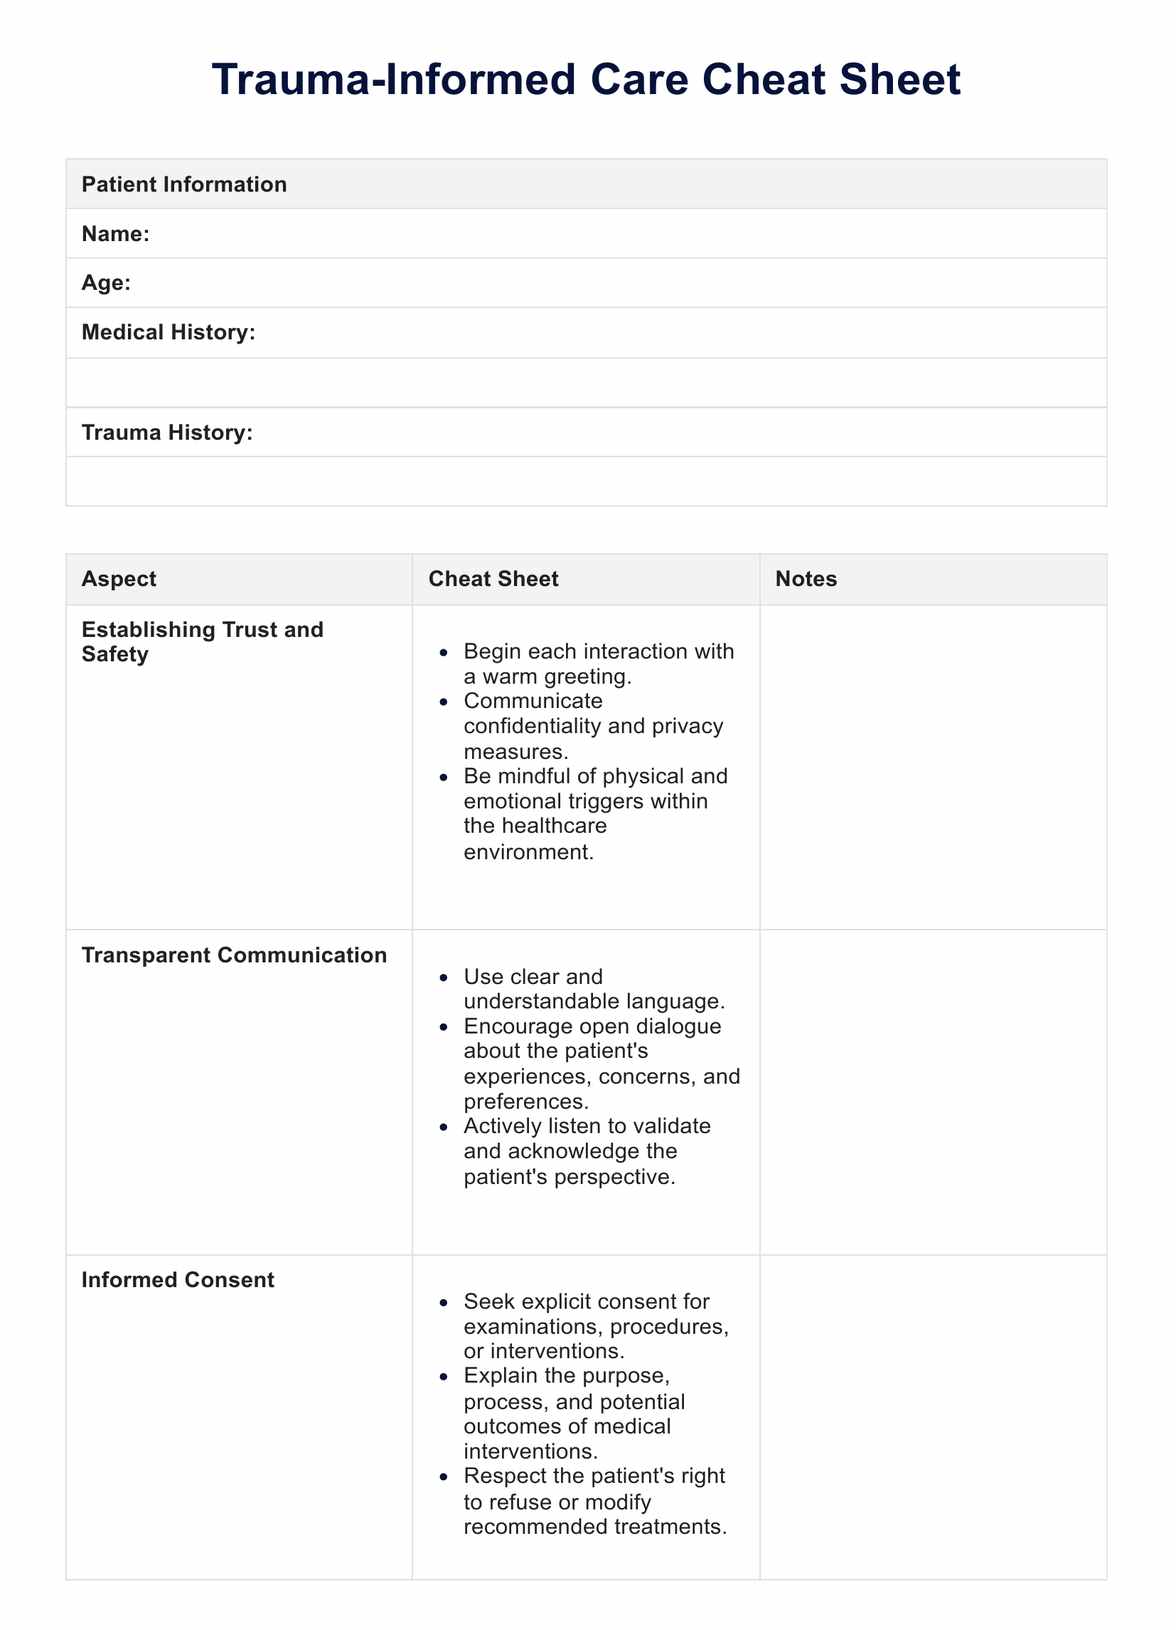 Trauma-Informed Care Cheat Sheet PDF Example